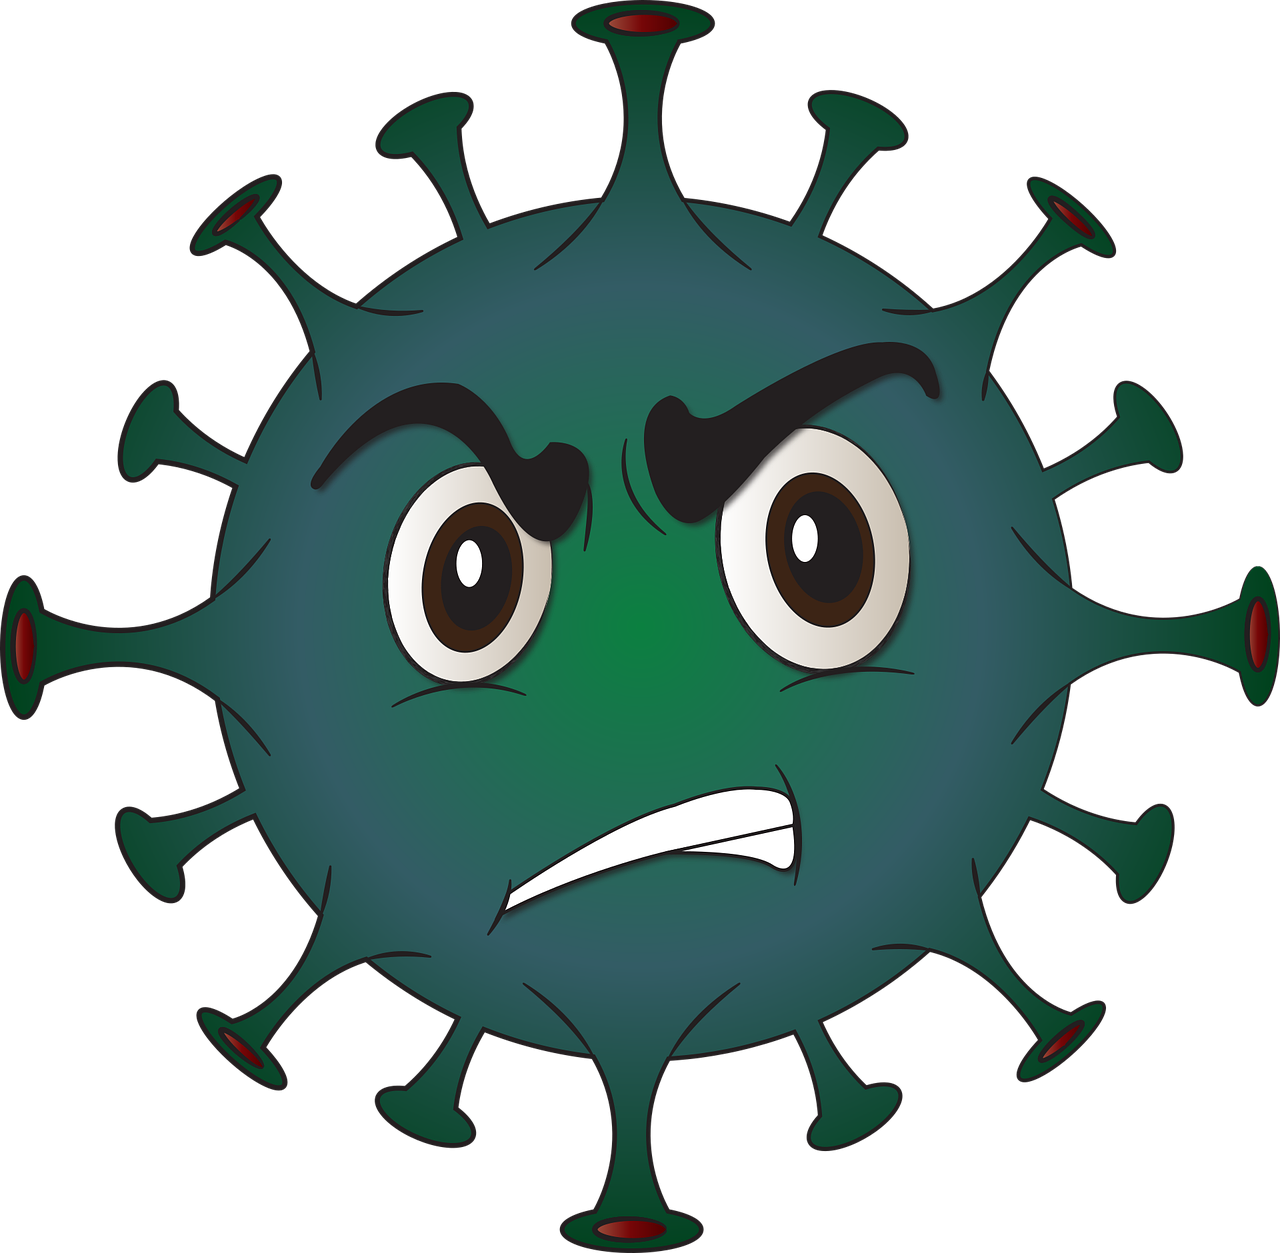 Бактерия Covid-19. Коронавирус бактерия вектор. Вирус микробы коронавирус. Коронавирус бактерия. Картинка вируса для детей